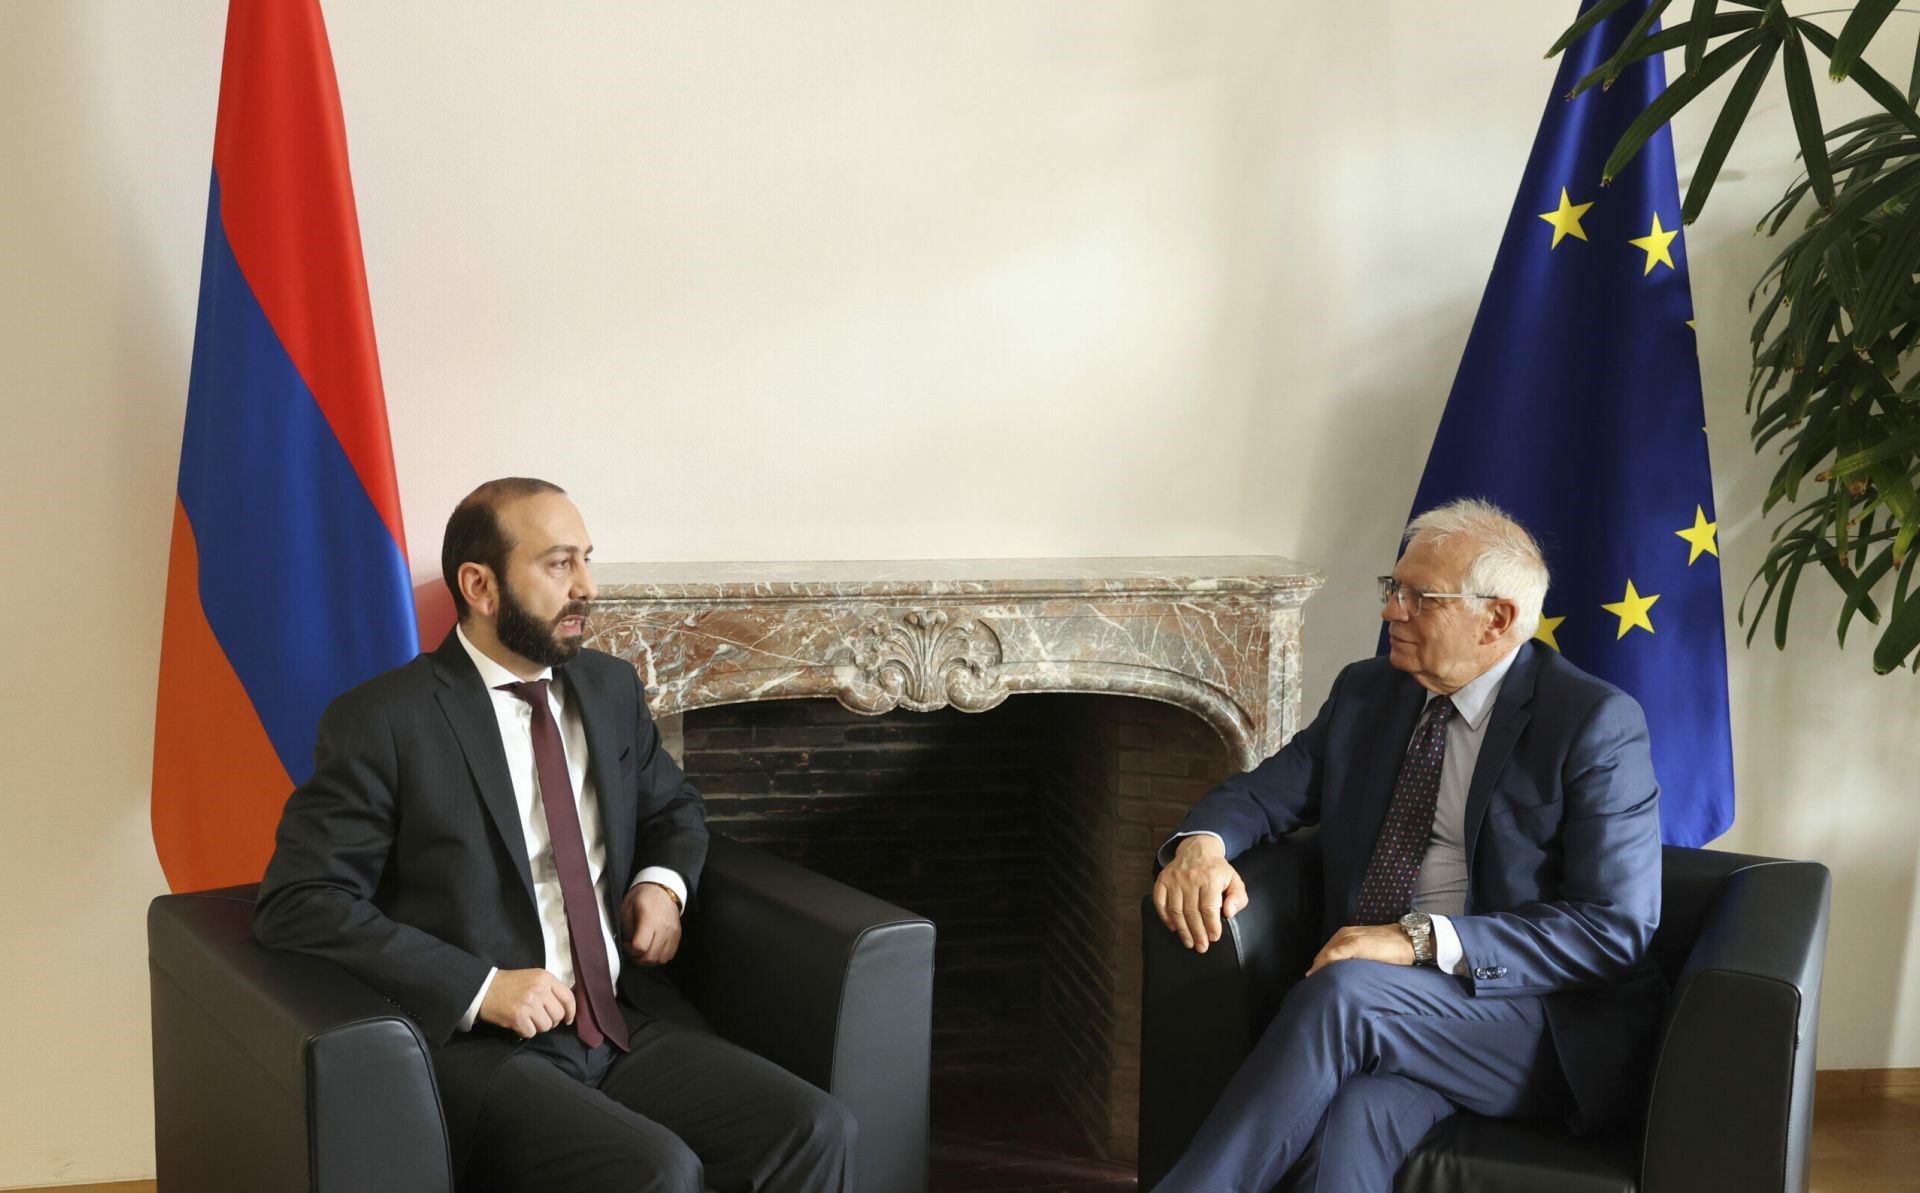 Deepening Armenia's ties with the European Union